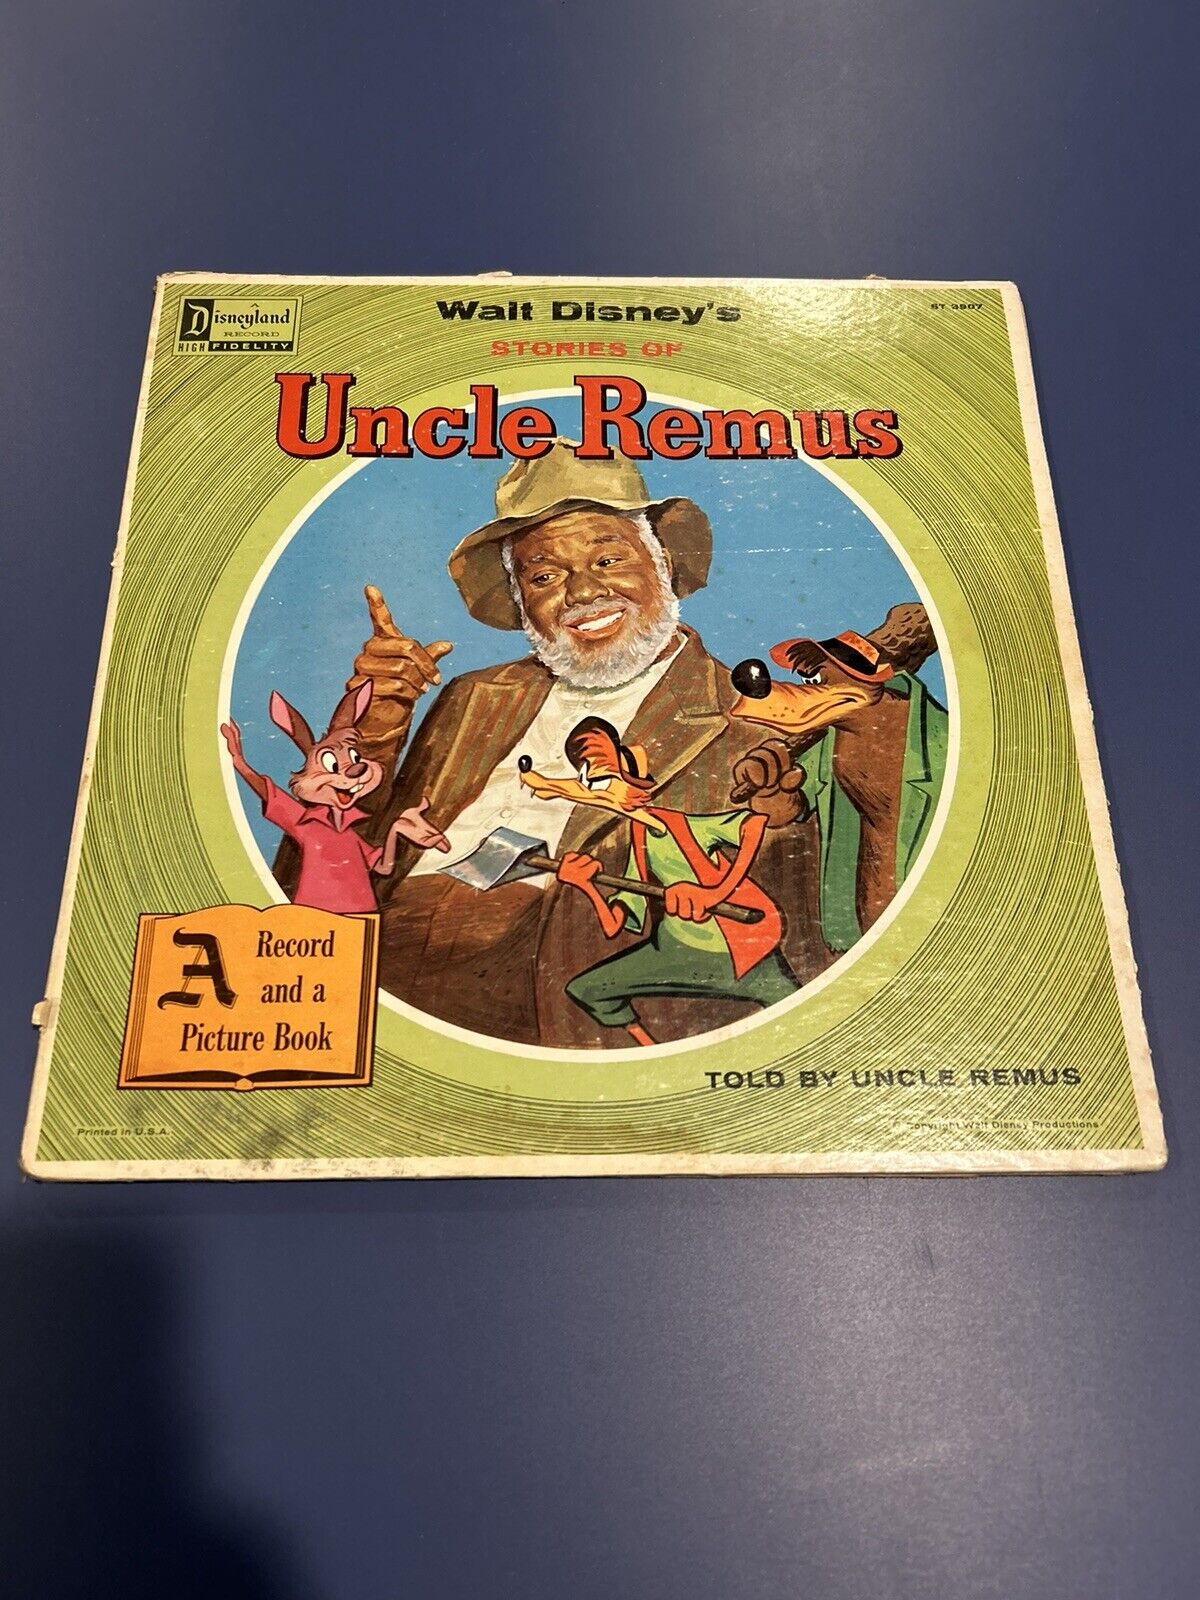 Walt Disney's Uncle Remus 1967 Disneyland ST-3907 Vinyl Record and Book VG